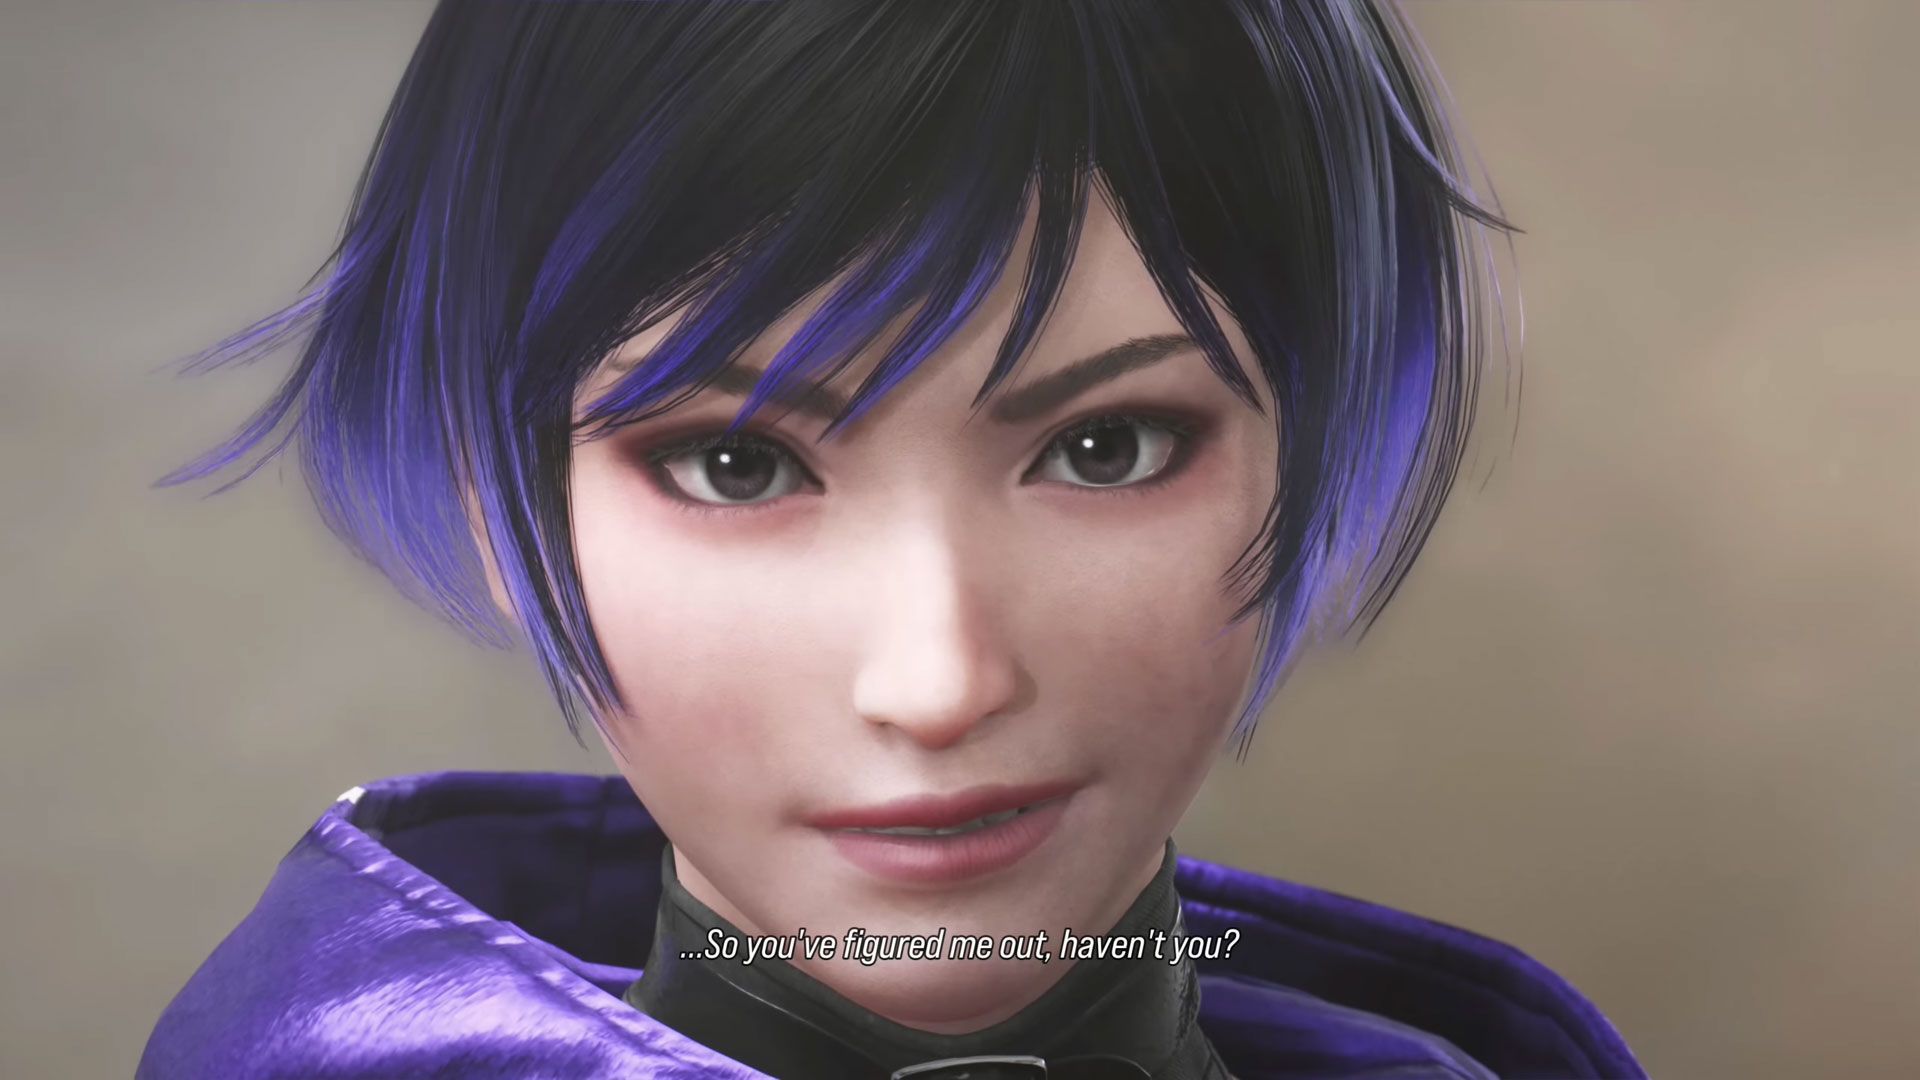 Tekken 8, PS5, Review, PlayStation 5, Gameplay, Screenshots, Female Protagonist, Violet hair